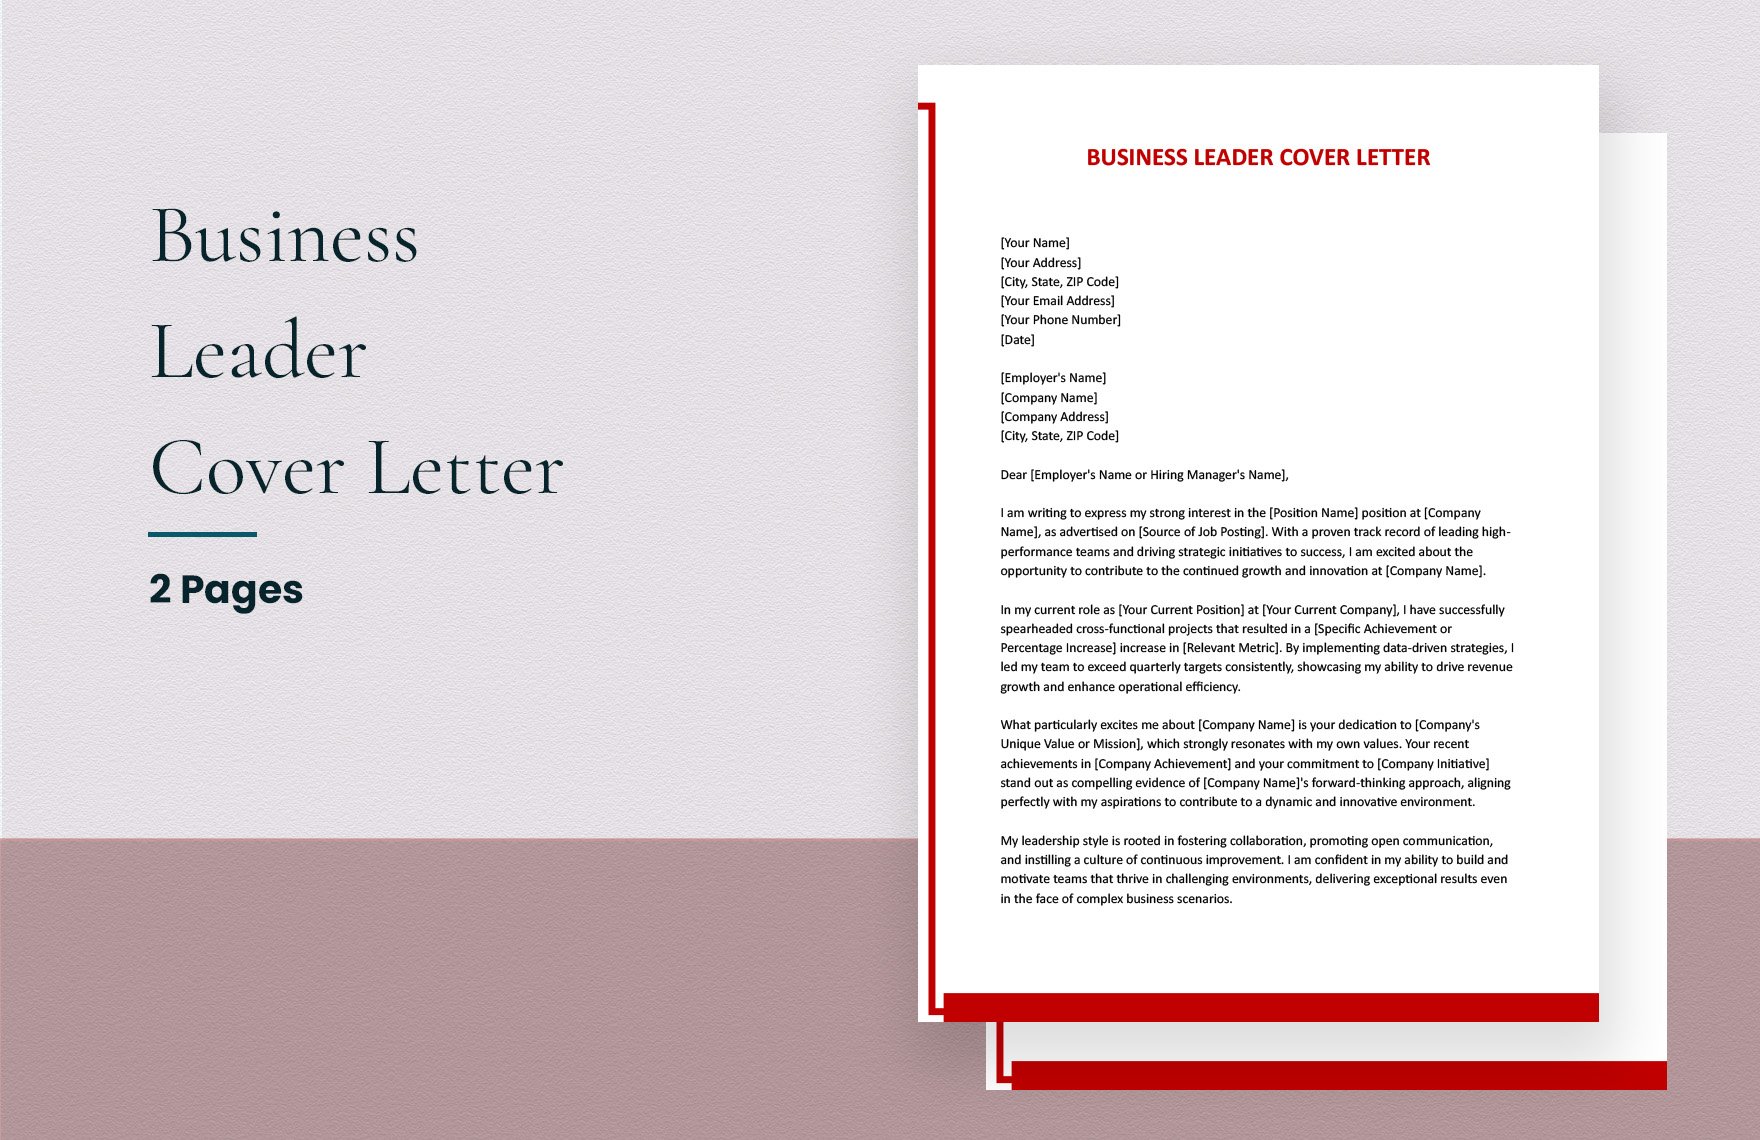 Business Leader Cover Letter